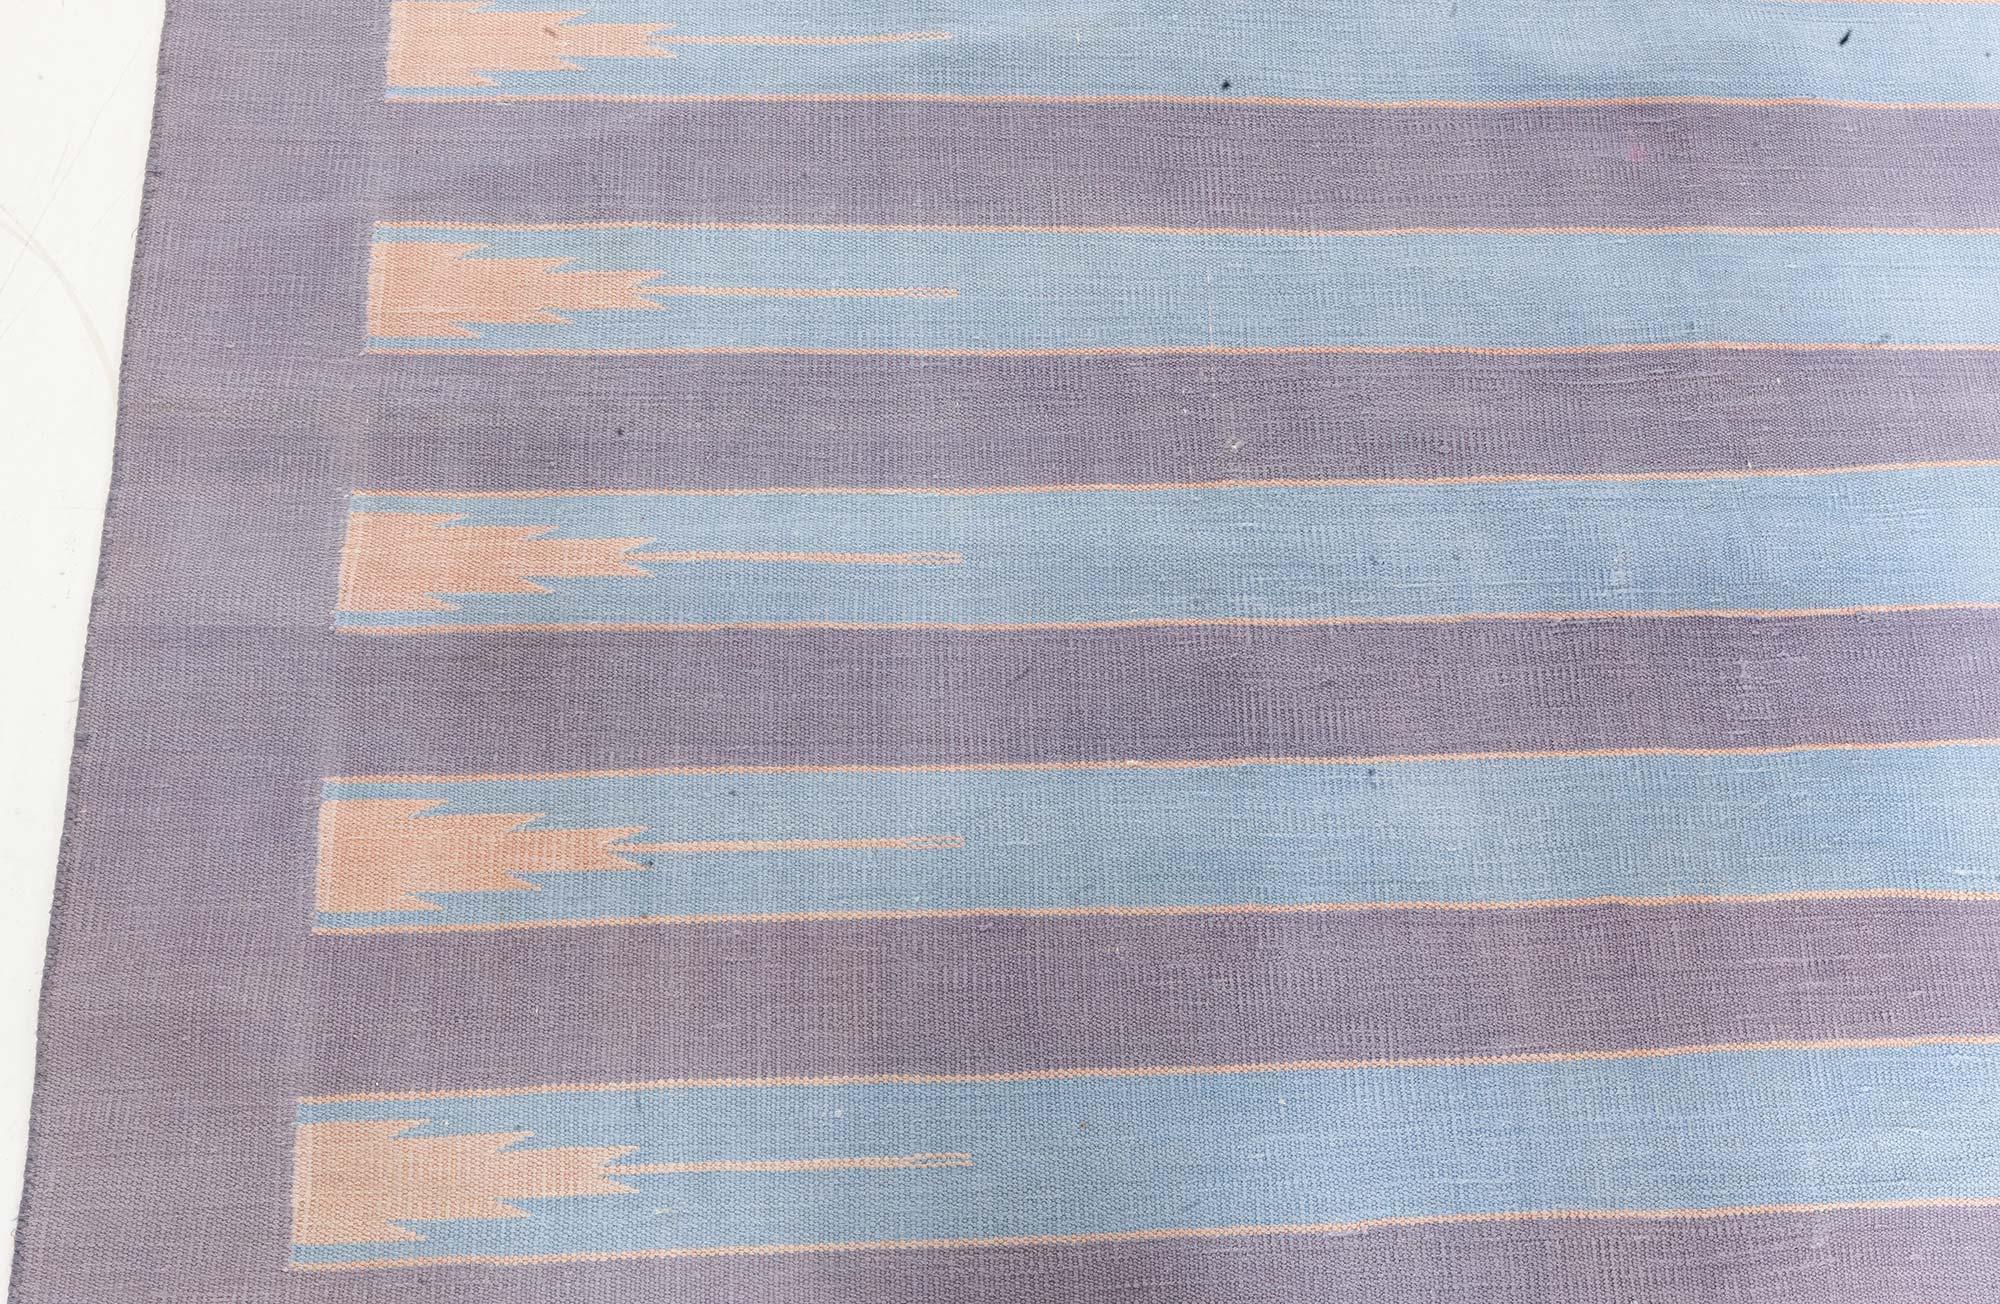 Vintage Indian Dhurrie Striped Blue Purple rug
Size: 9'7